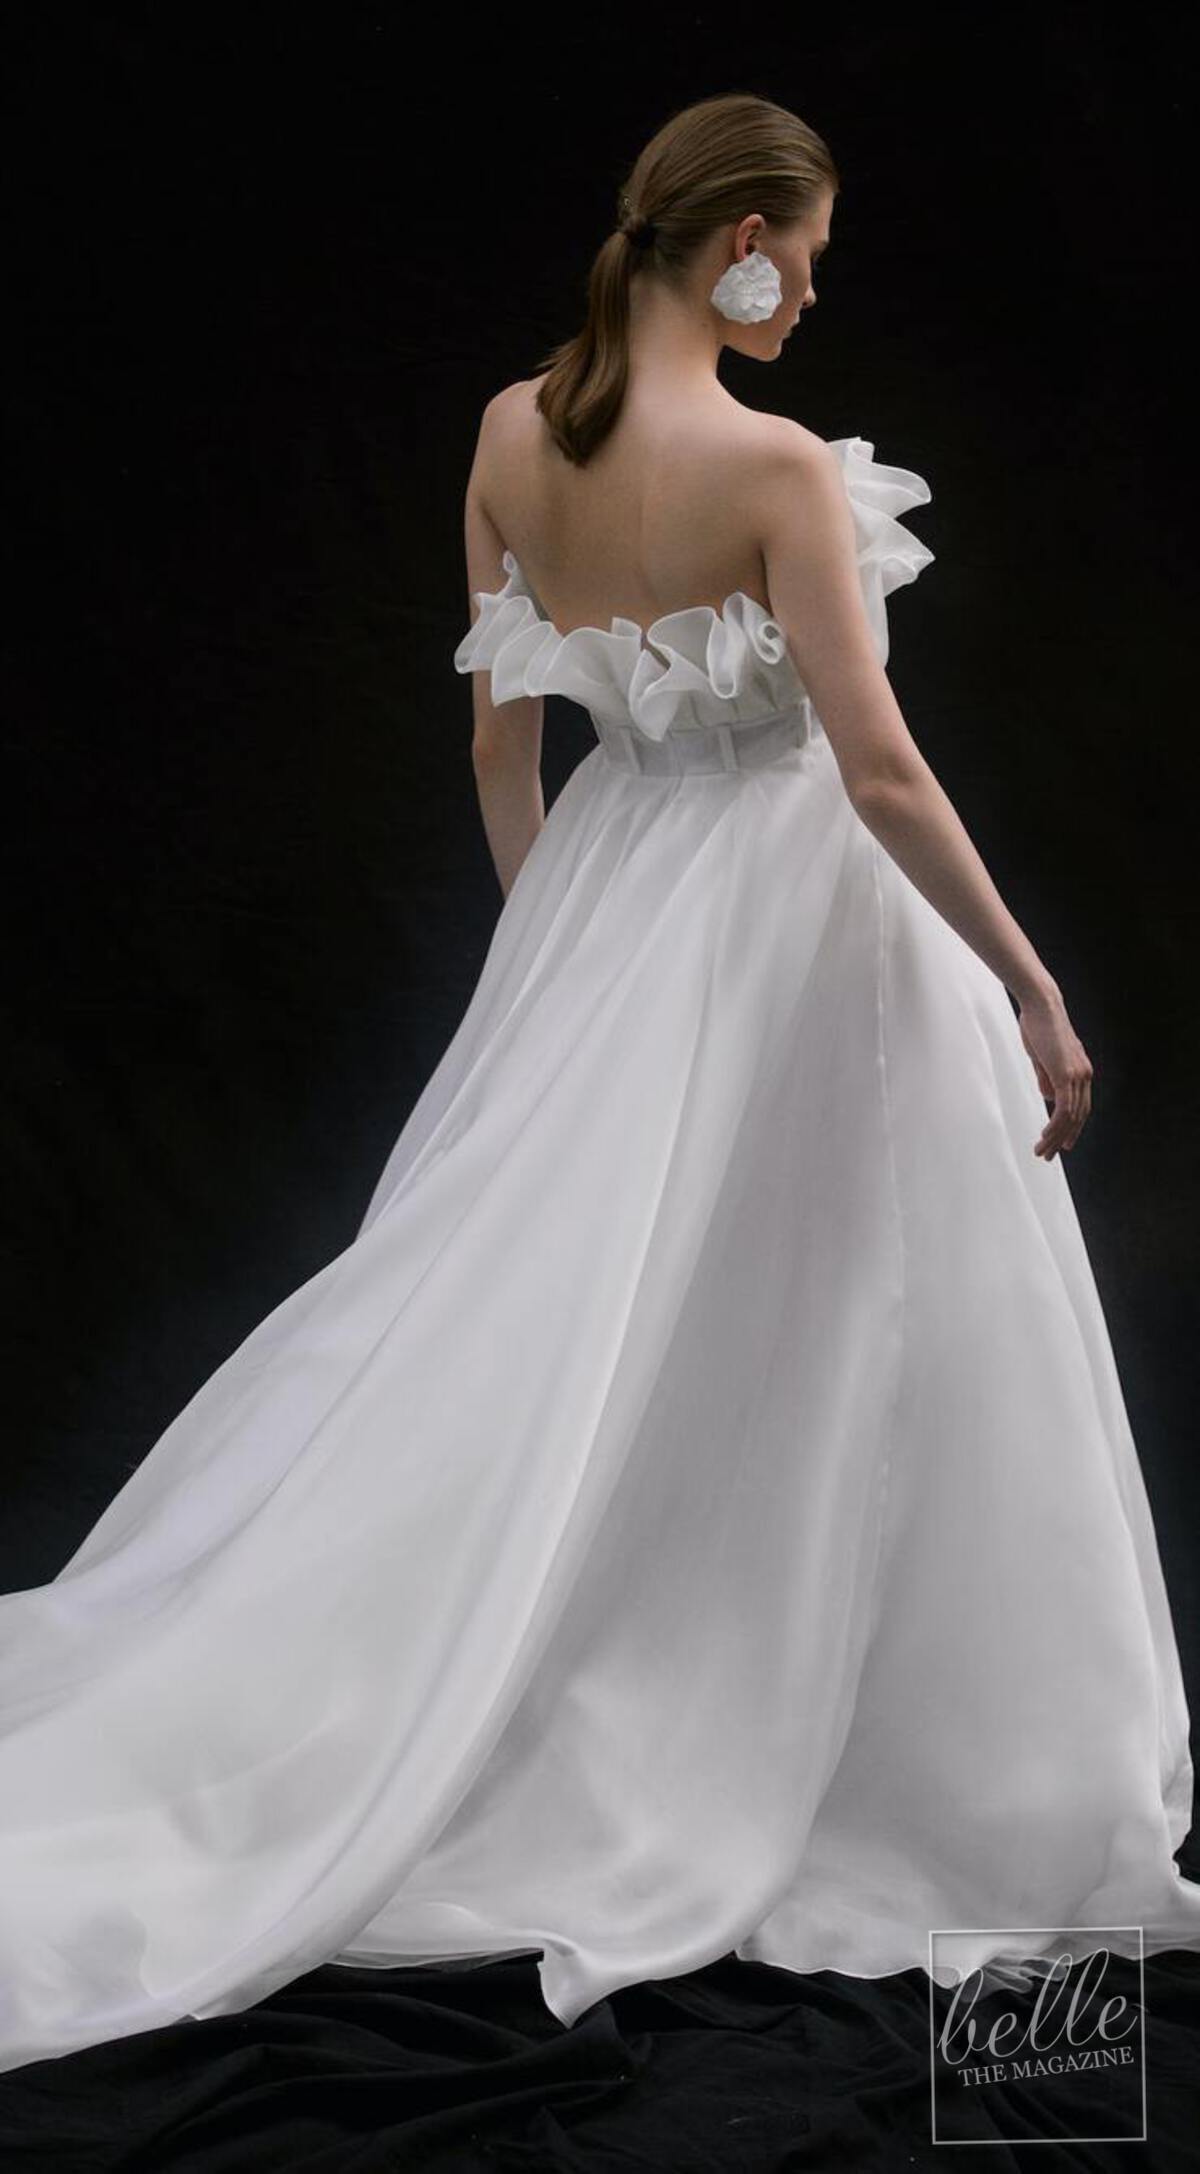 Wedding dress trends 2021 - Ruffles - FRANCESCA MIRANDA Siena